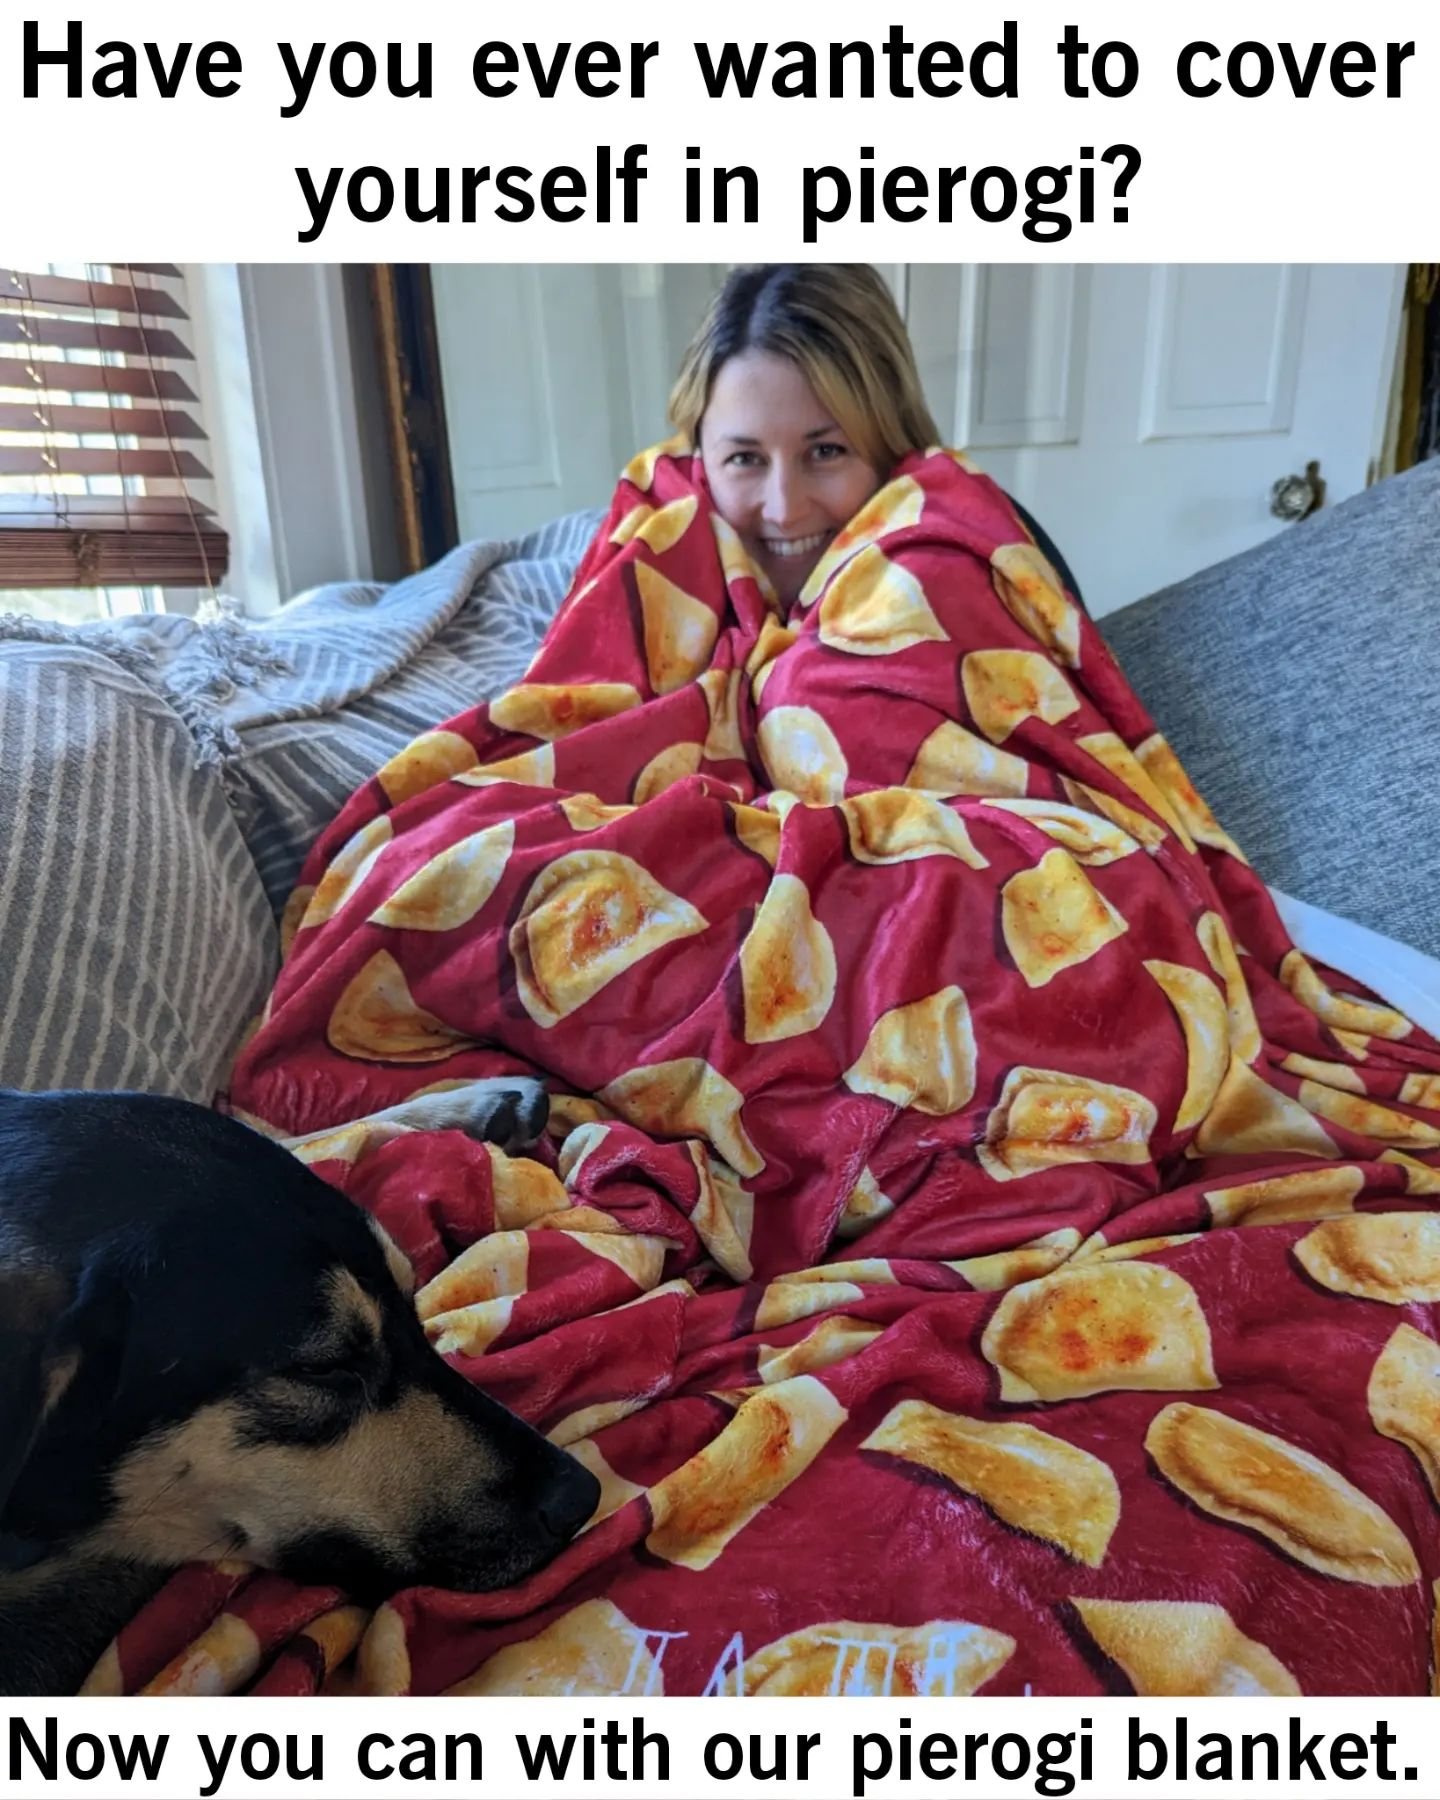 Cover yourself in pierogi, hide under pierogi, wrap yourself in pierogi. Now you can with our pierogi blanket. Available at shop.jajupierogi.com